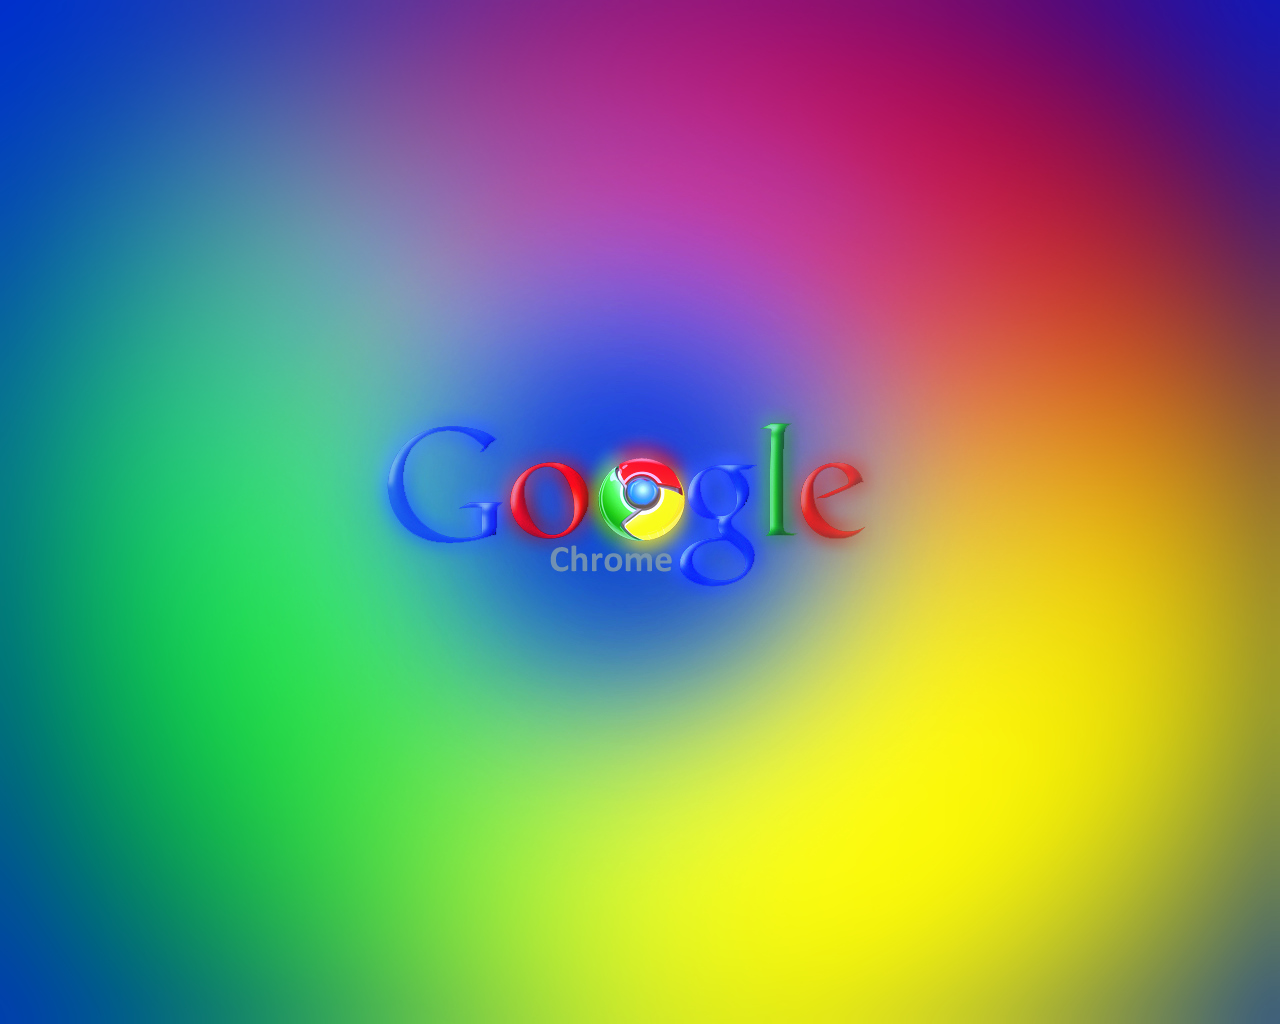 Wallpaper Google Themes Chrome